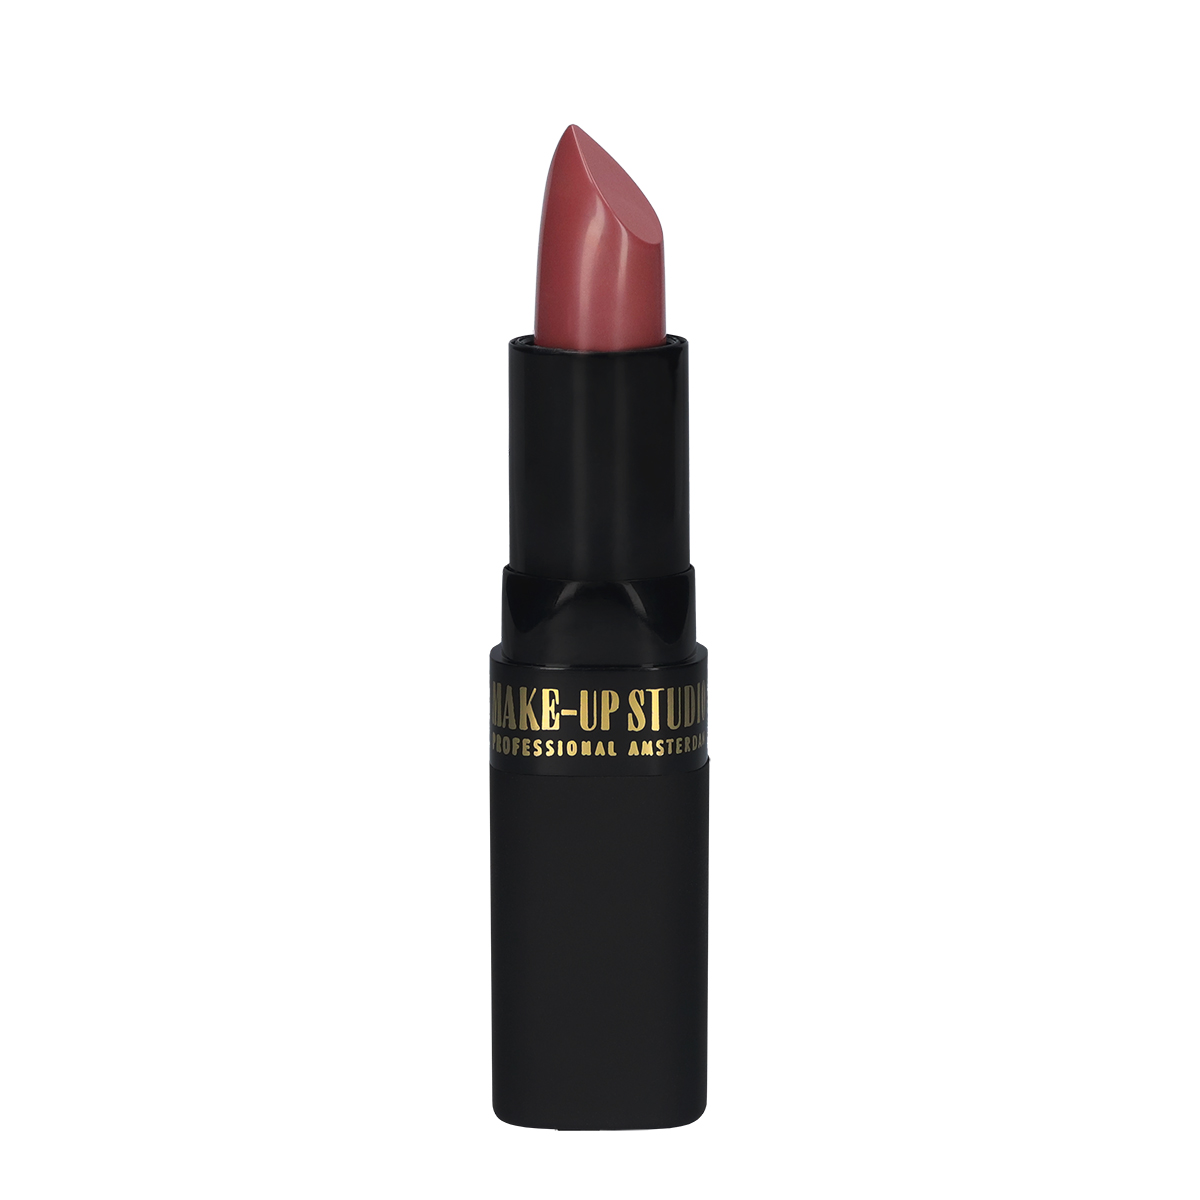 Make-up Studio Lipstick Lippenstift - 44 Nude Brown